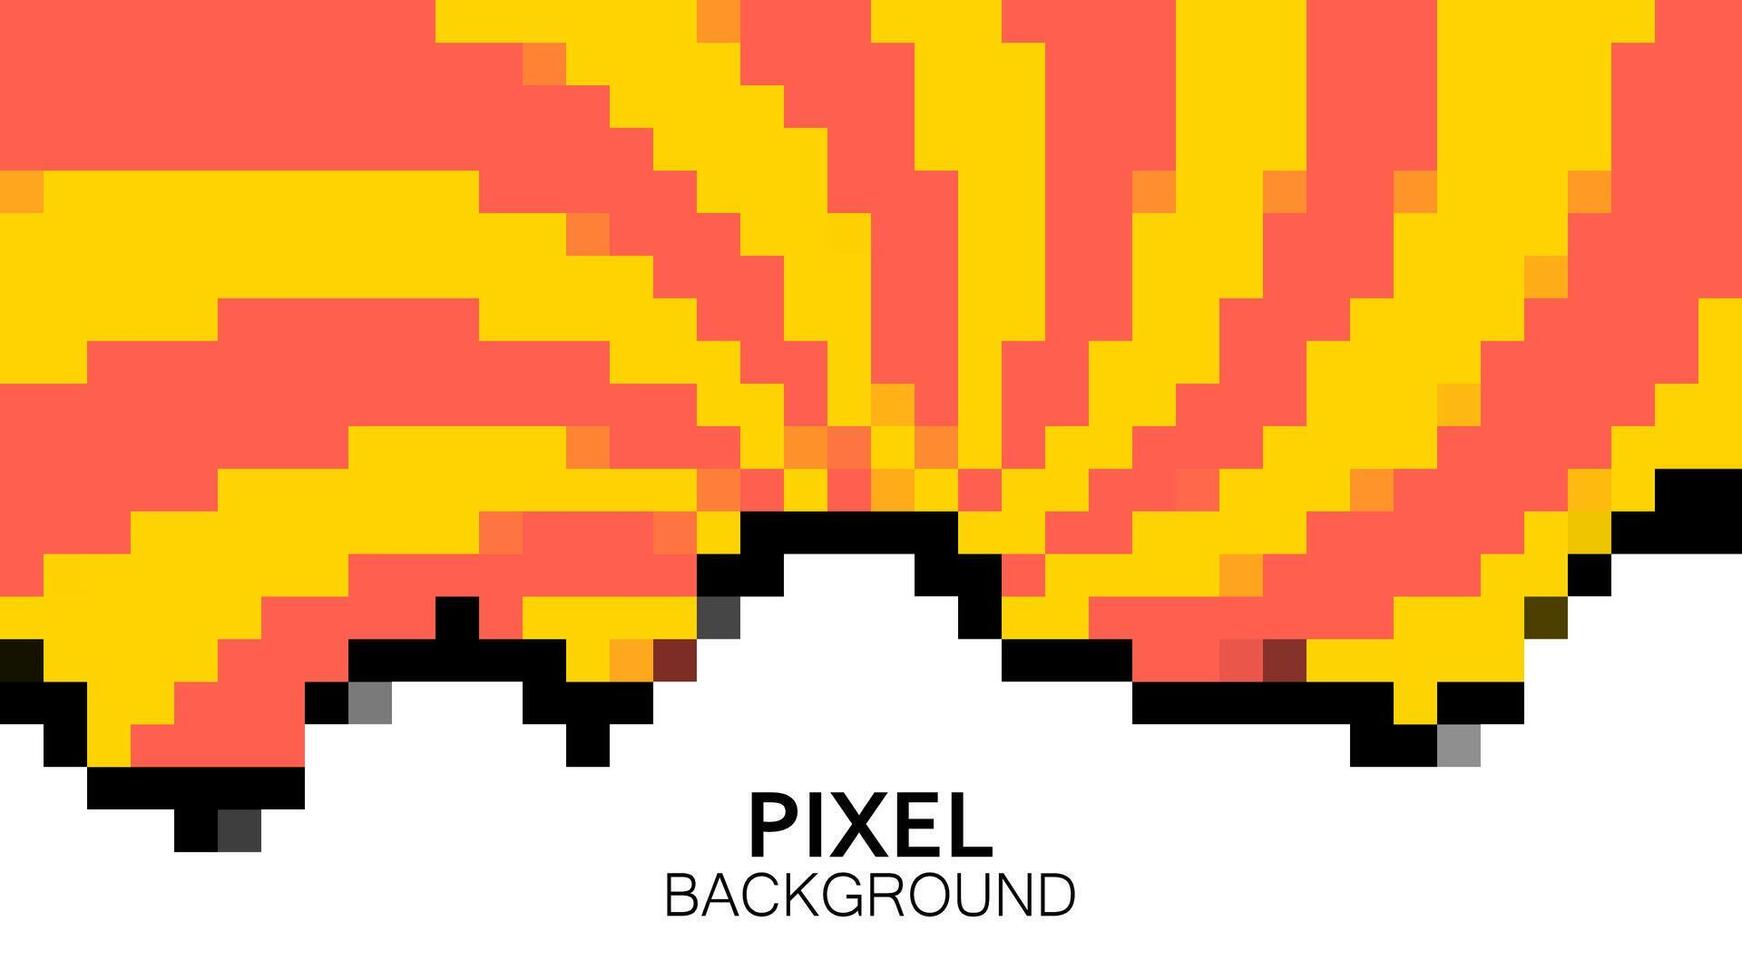 Blank cloud background sunlight pixel style design. vector illustration. Media promotion backdrop.